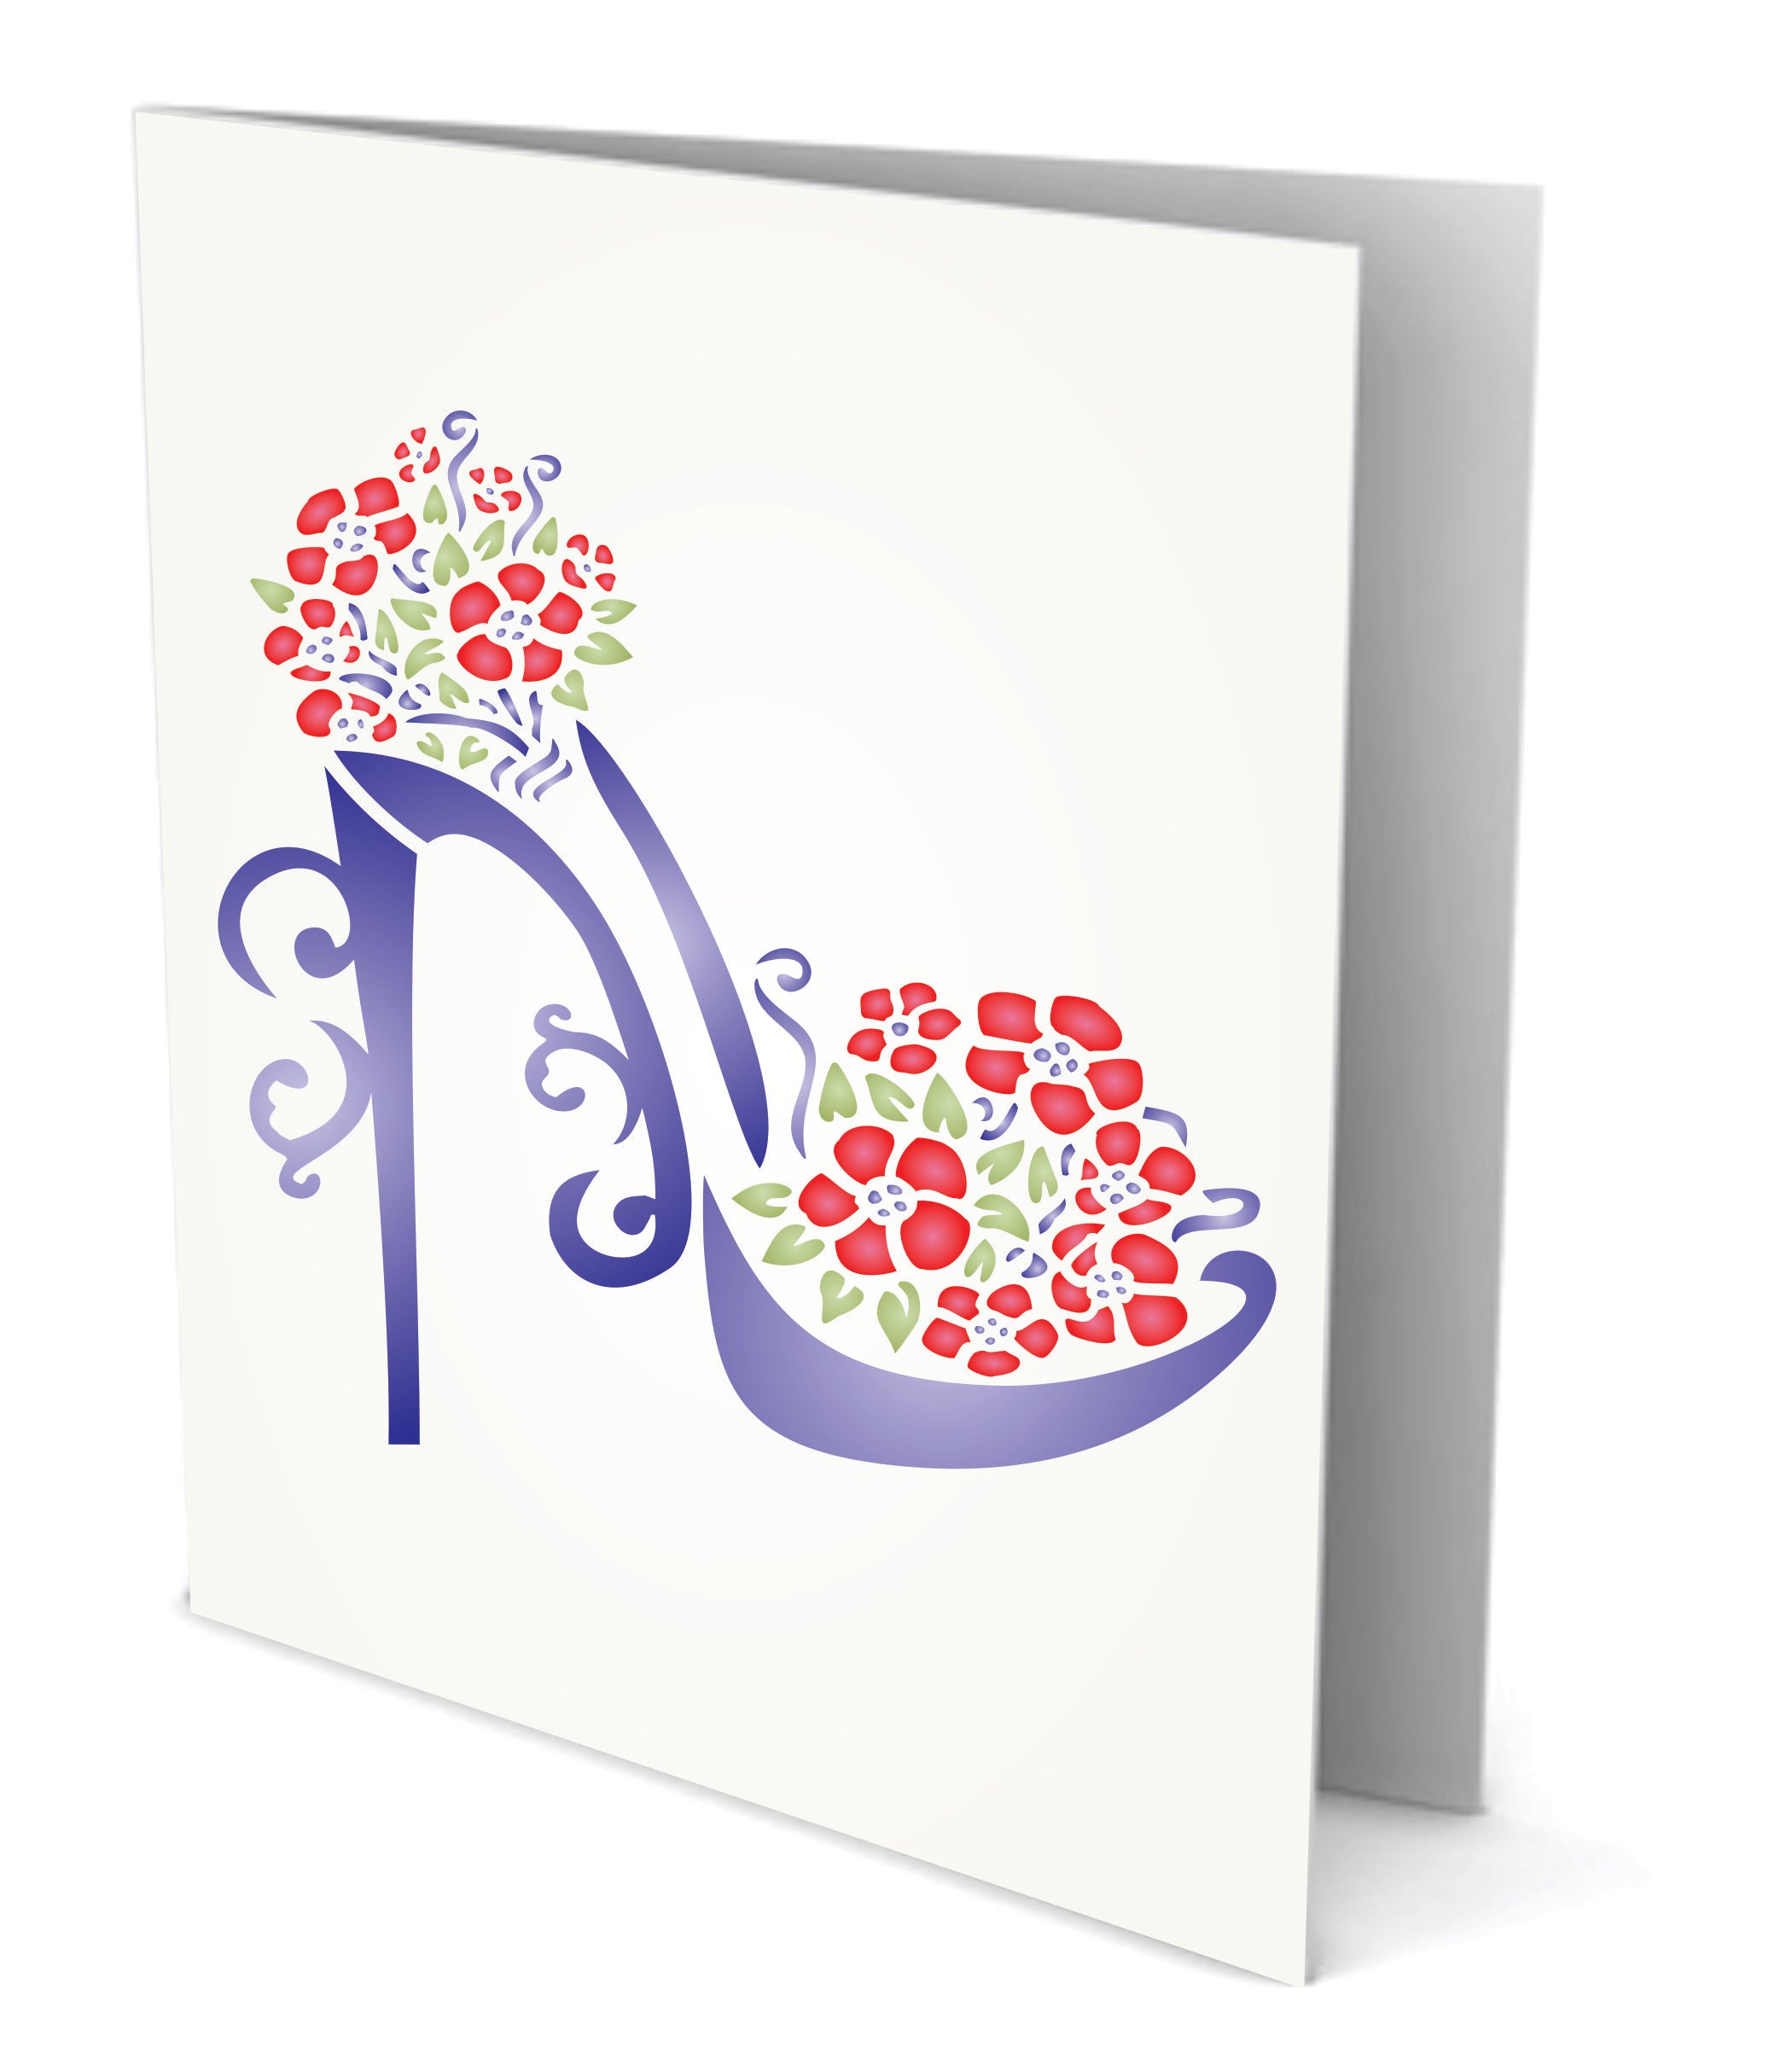 High Heel Shoe Stencil - Decorative Flower Filled Stiletto Platform Shoes